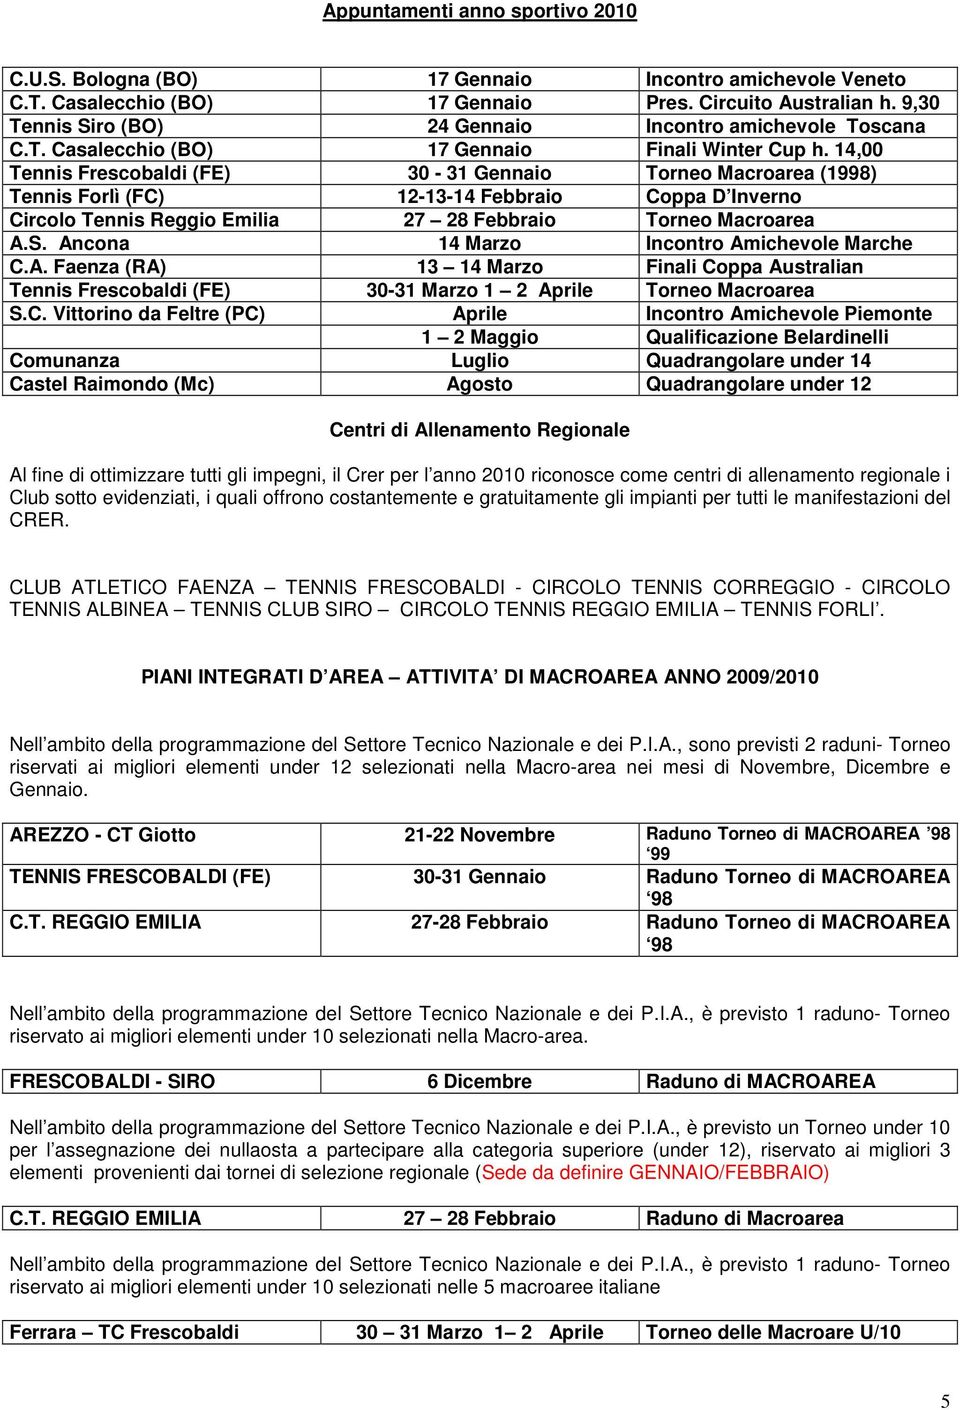 14,00 Tennis Frescobaldi (FE) 30-31 Gennaio Torneo Macroarea (1998) Tennis Forlì (FC) 12-13-14 Febbraio Coppa D Inverno Circolo Tennis Reggio Emilia 27 28 Febbraio Torneo Macroarea A.S.